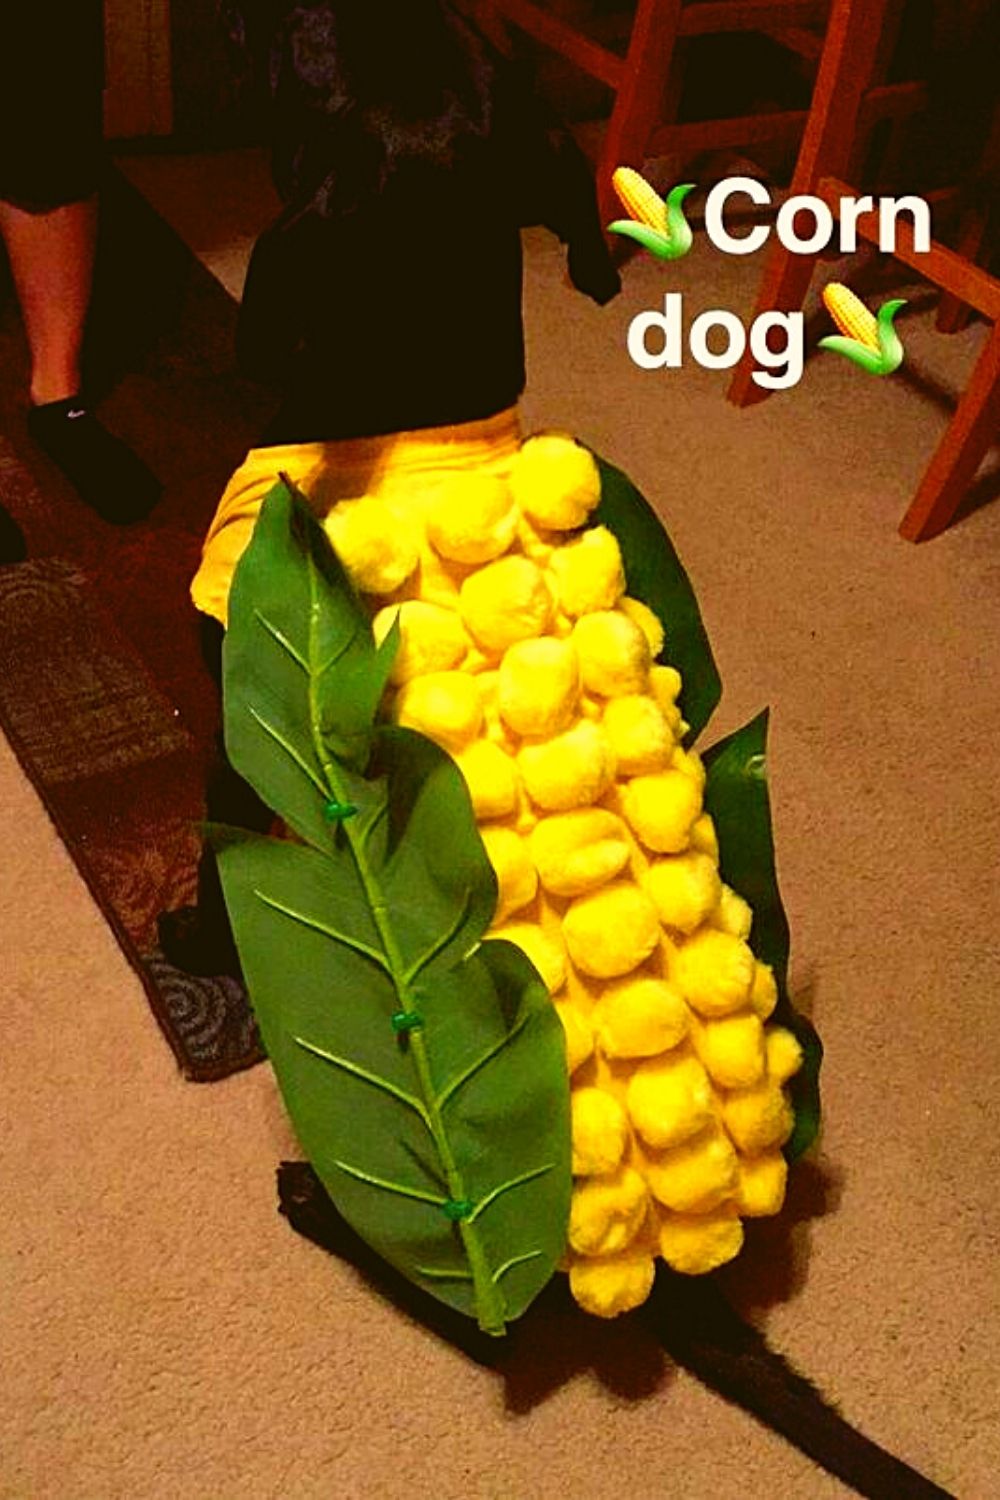 Corn dog costume for Halloween.